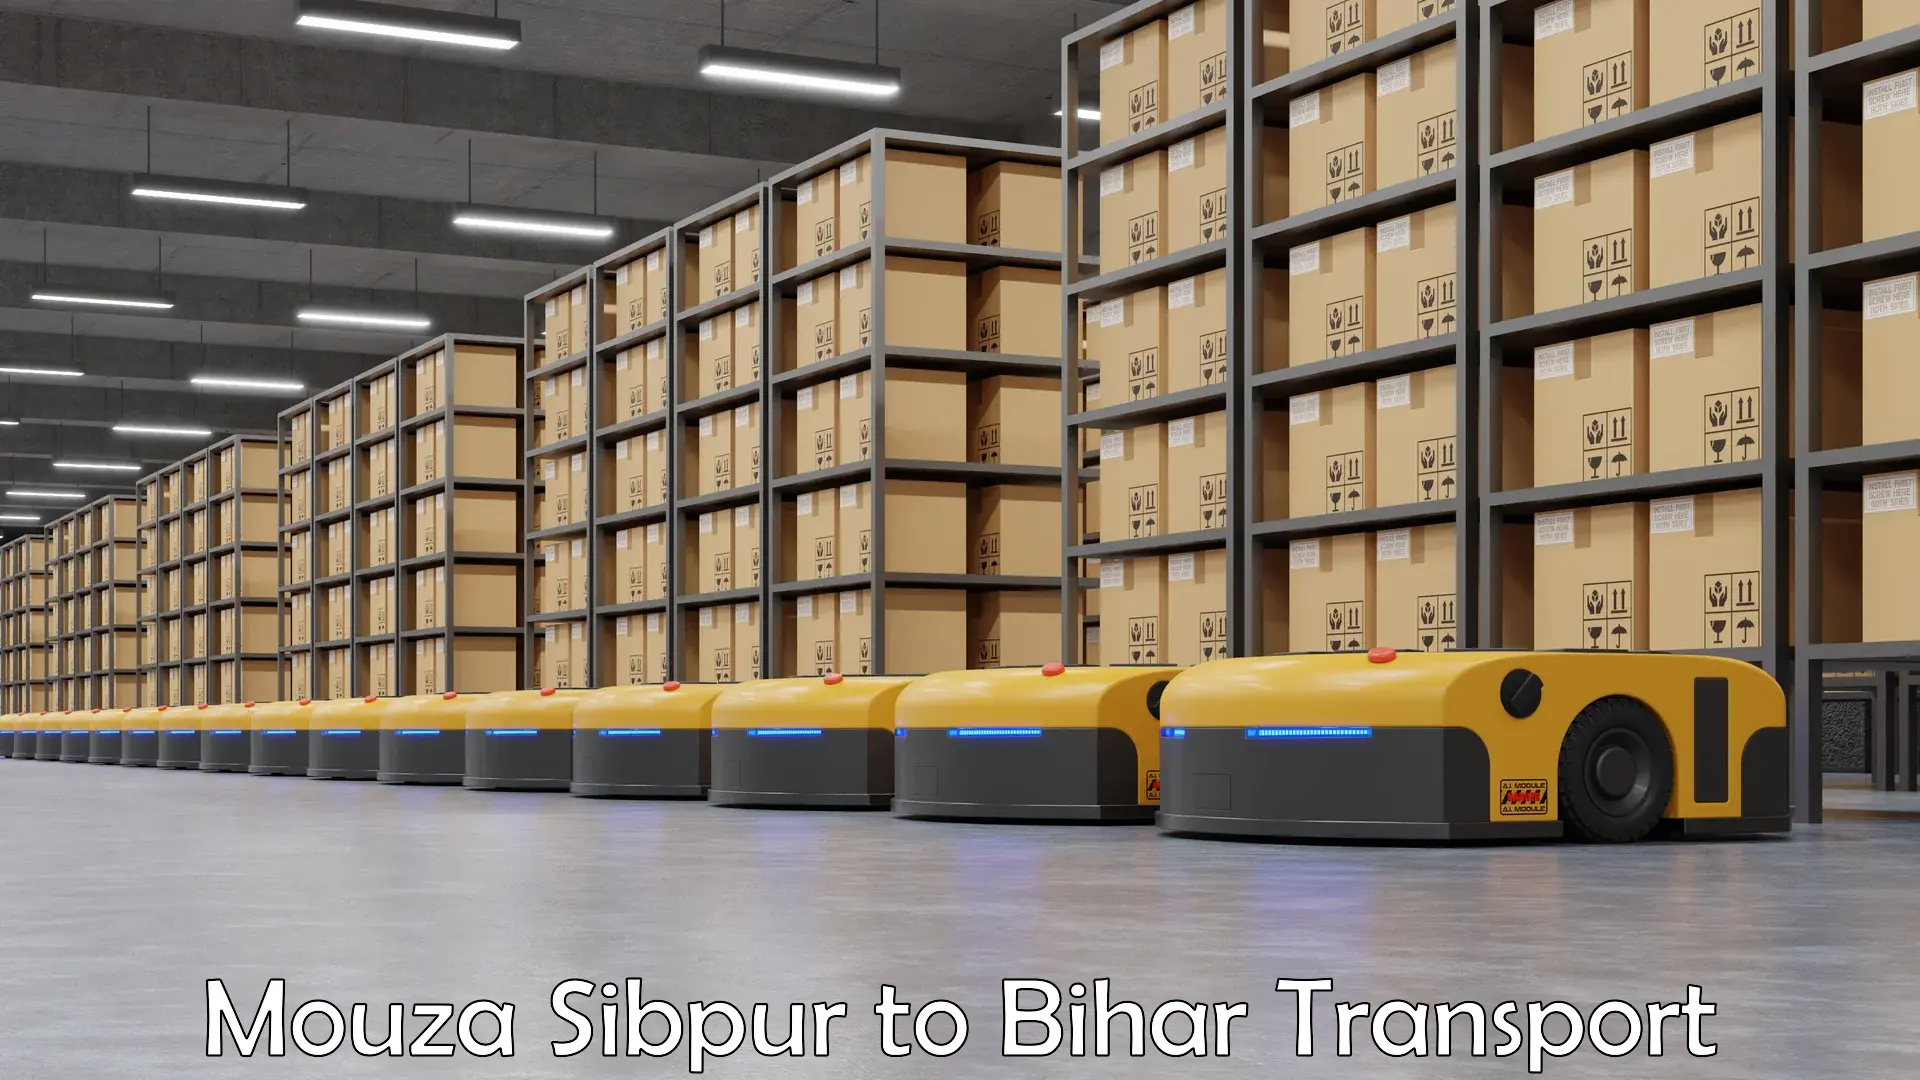 Truck transport companies in India Mouza Sibpur to Bihar